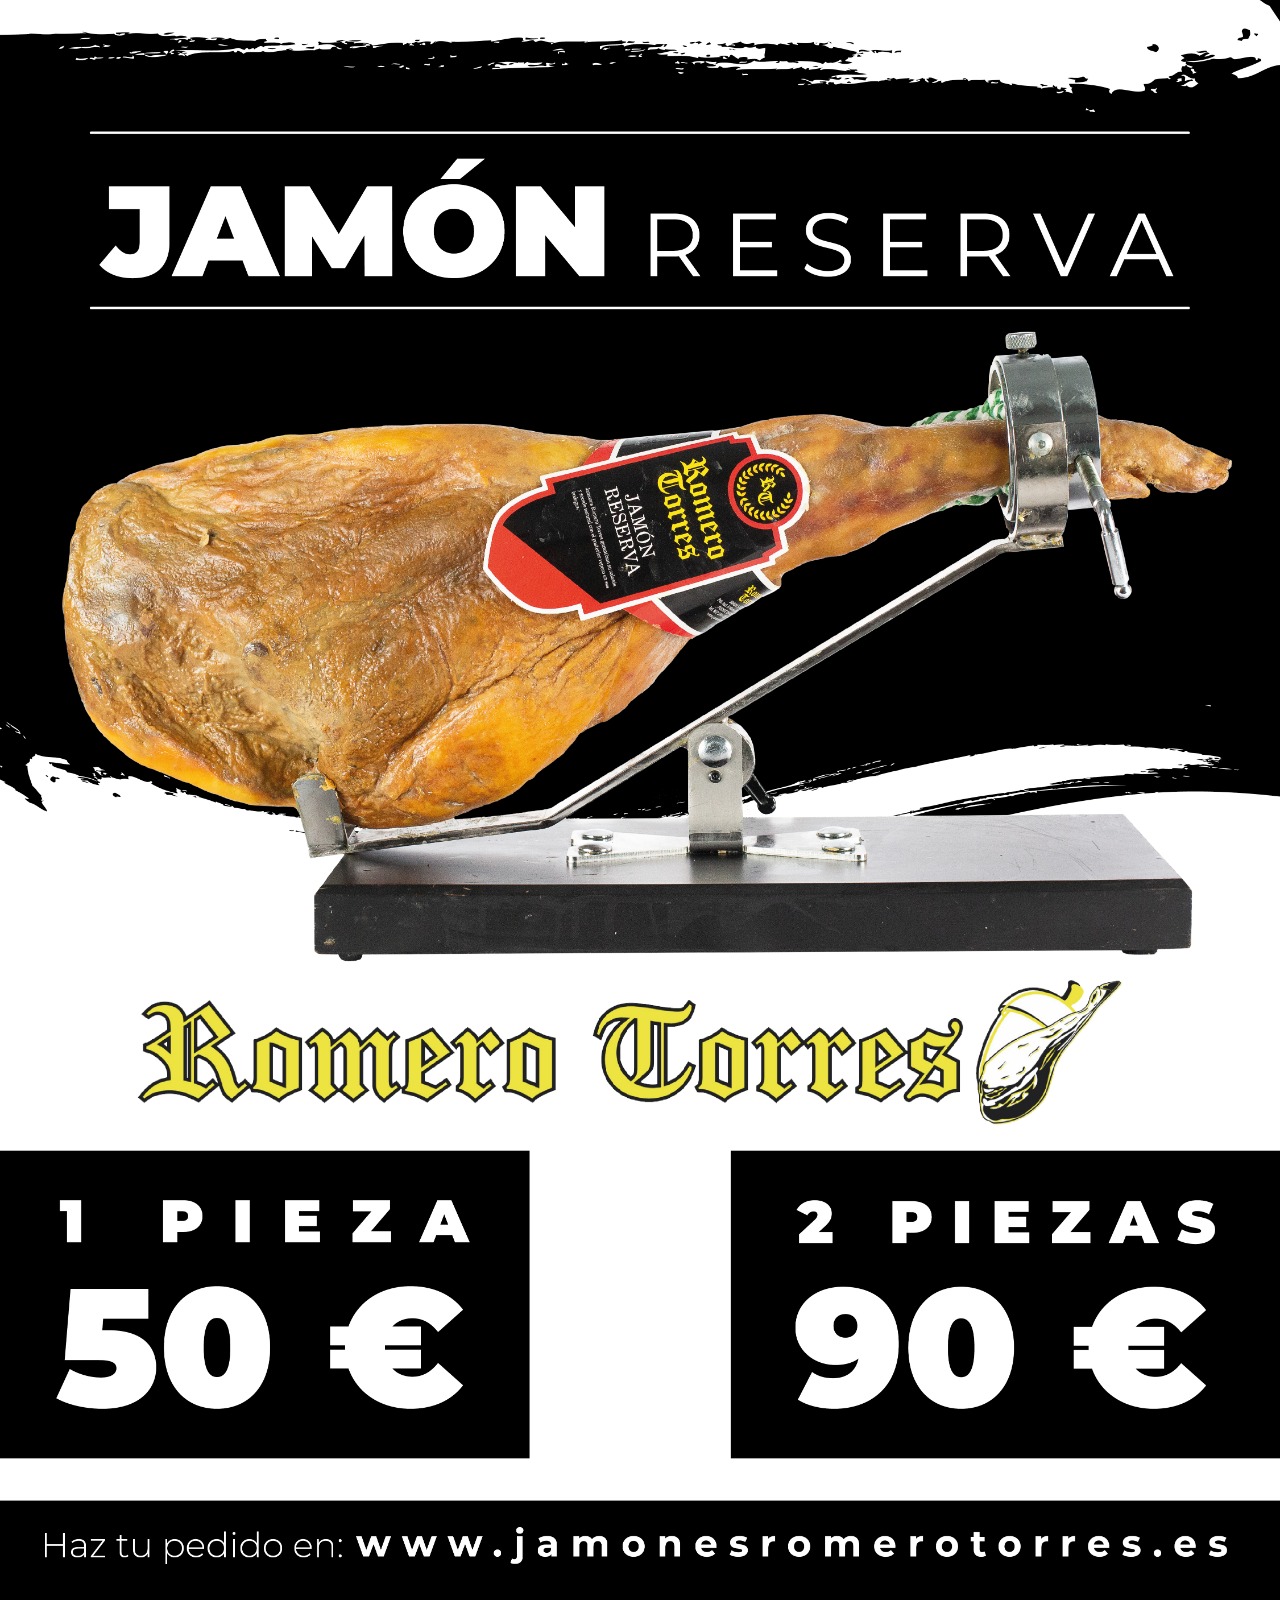 Oferta Jamón Reserva Romero Torres